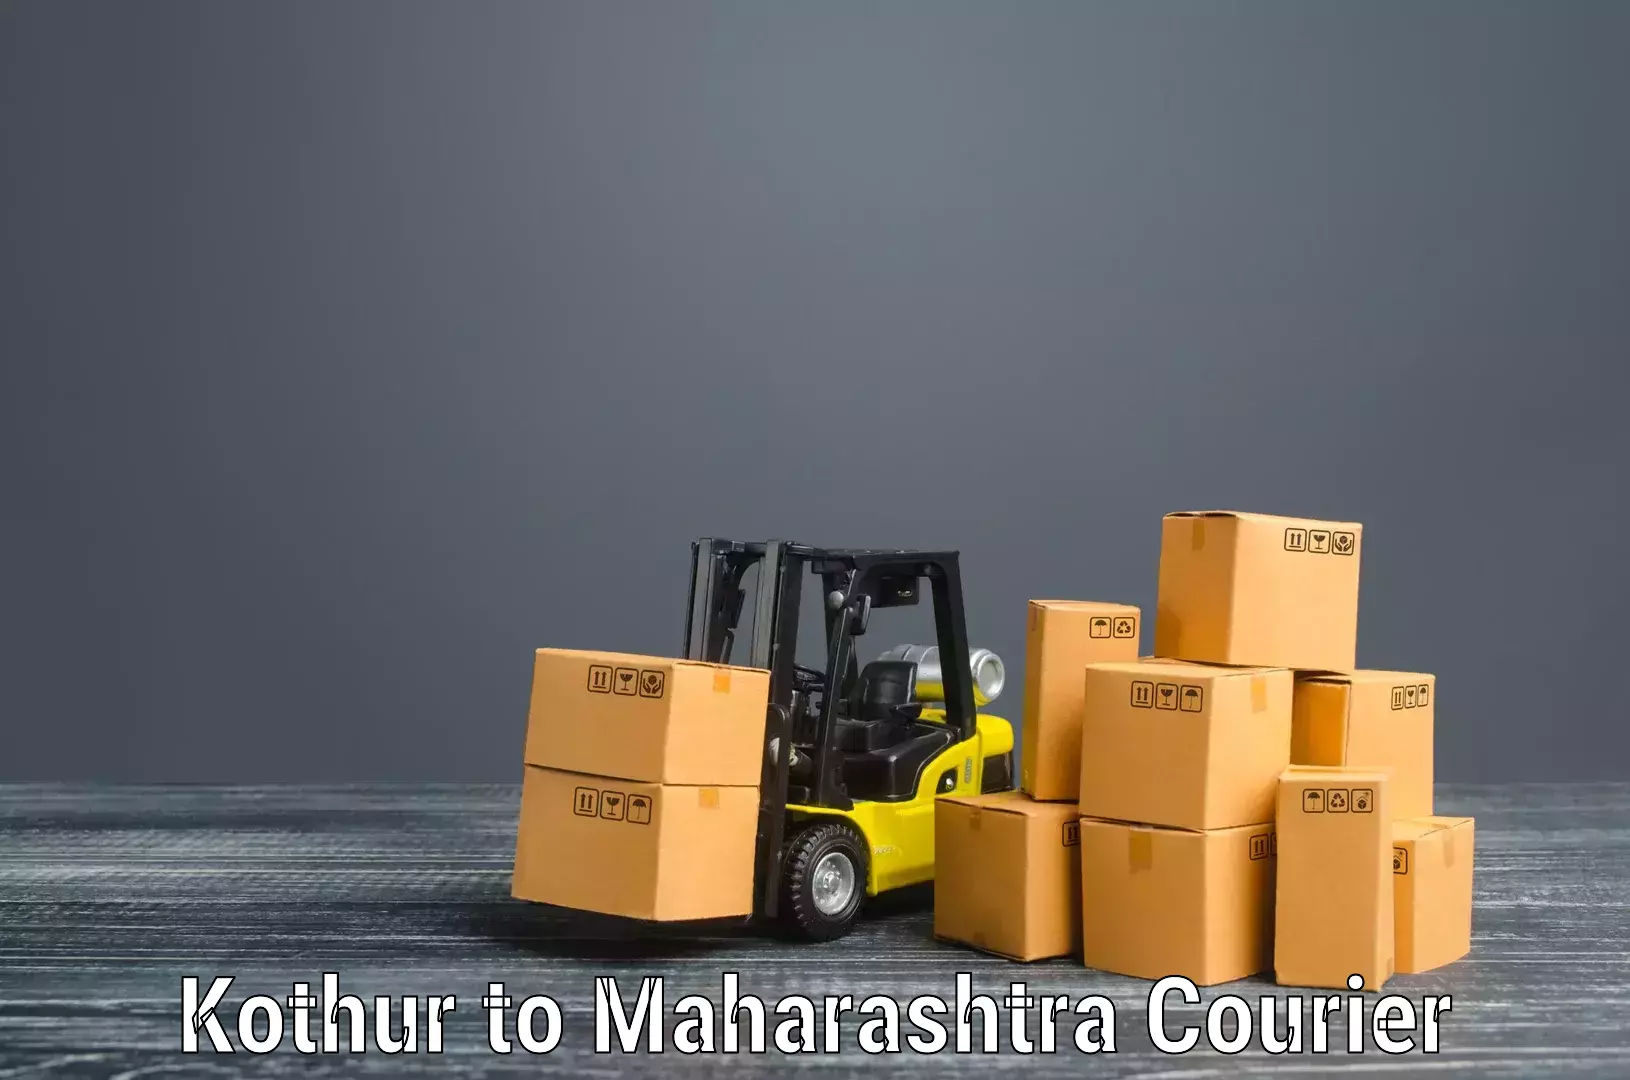 Moving and packing experts Kothur to Maharashtra